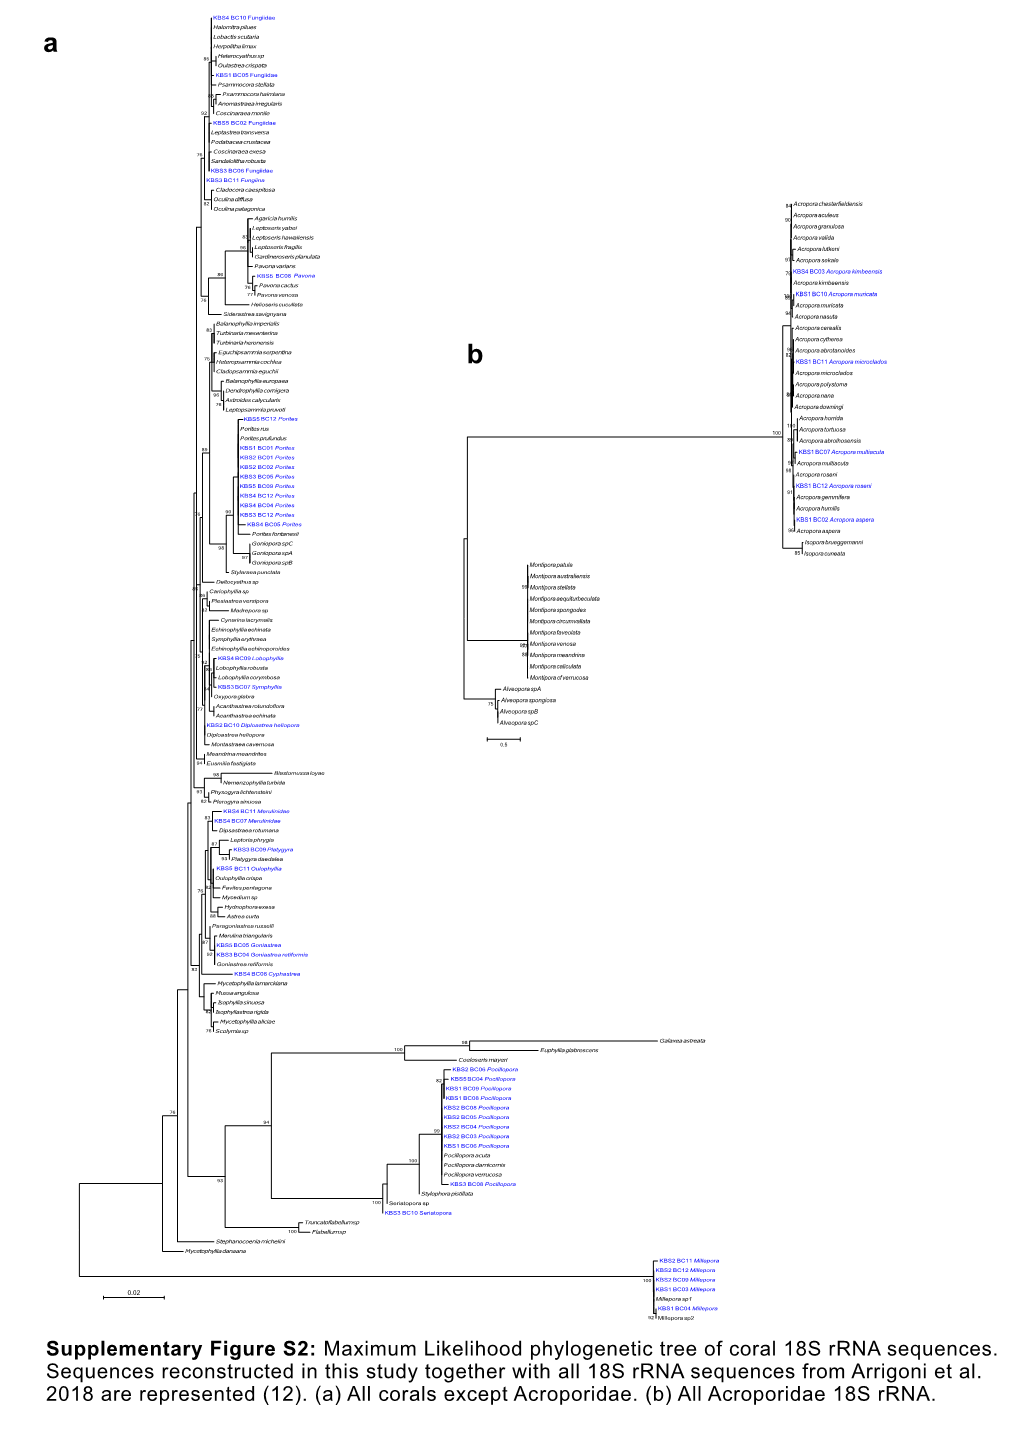 Maximum Likelihood Phylogenetic Tree of Coral 18S Rrna Sequences